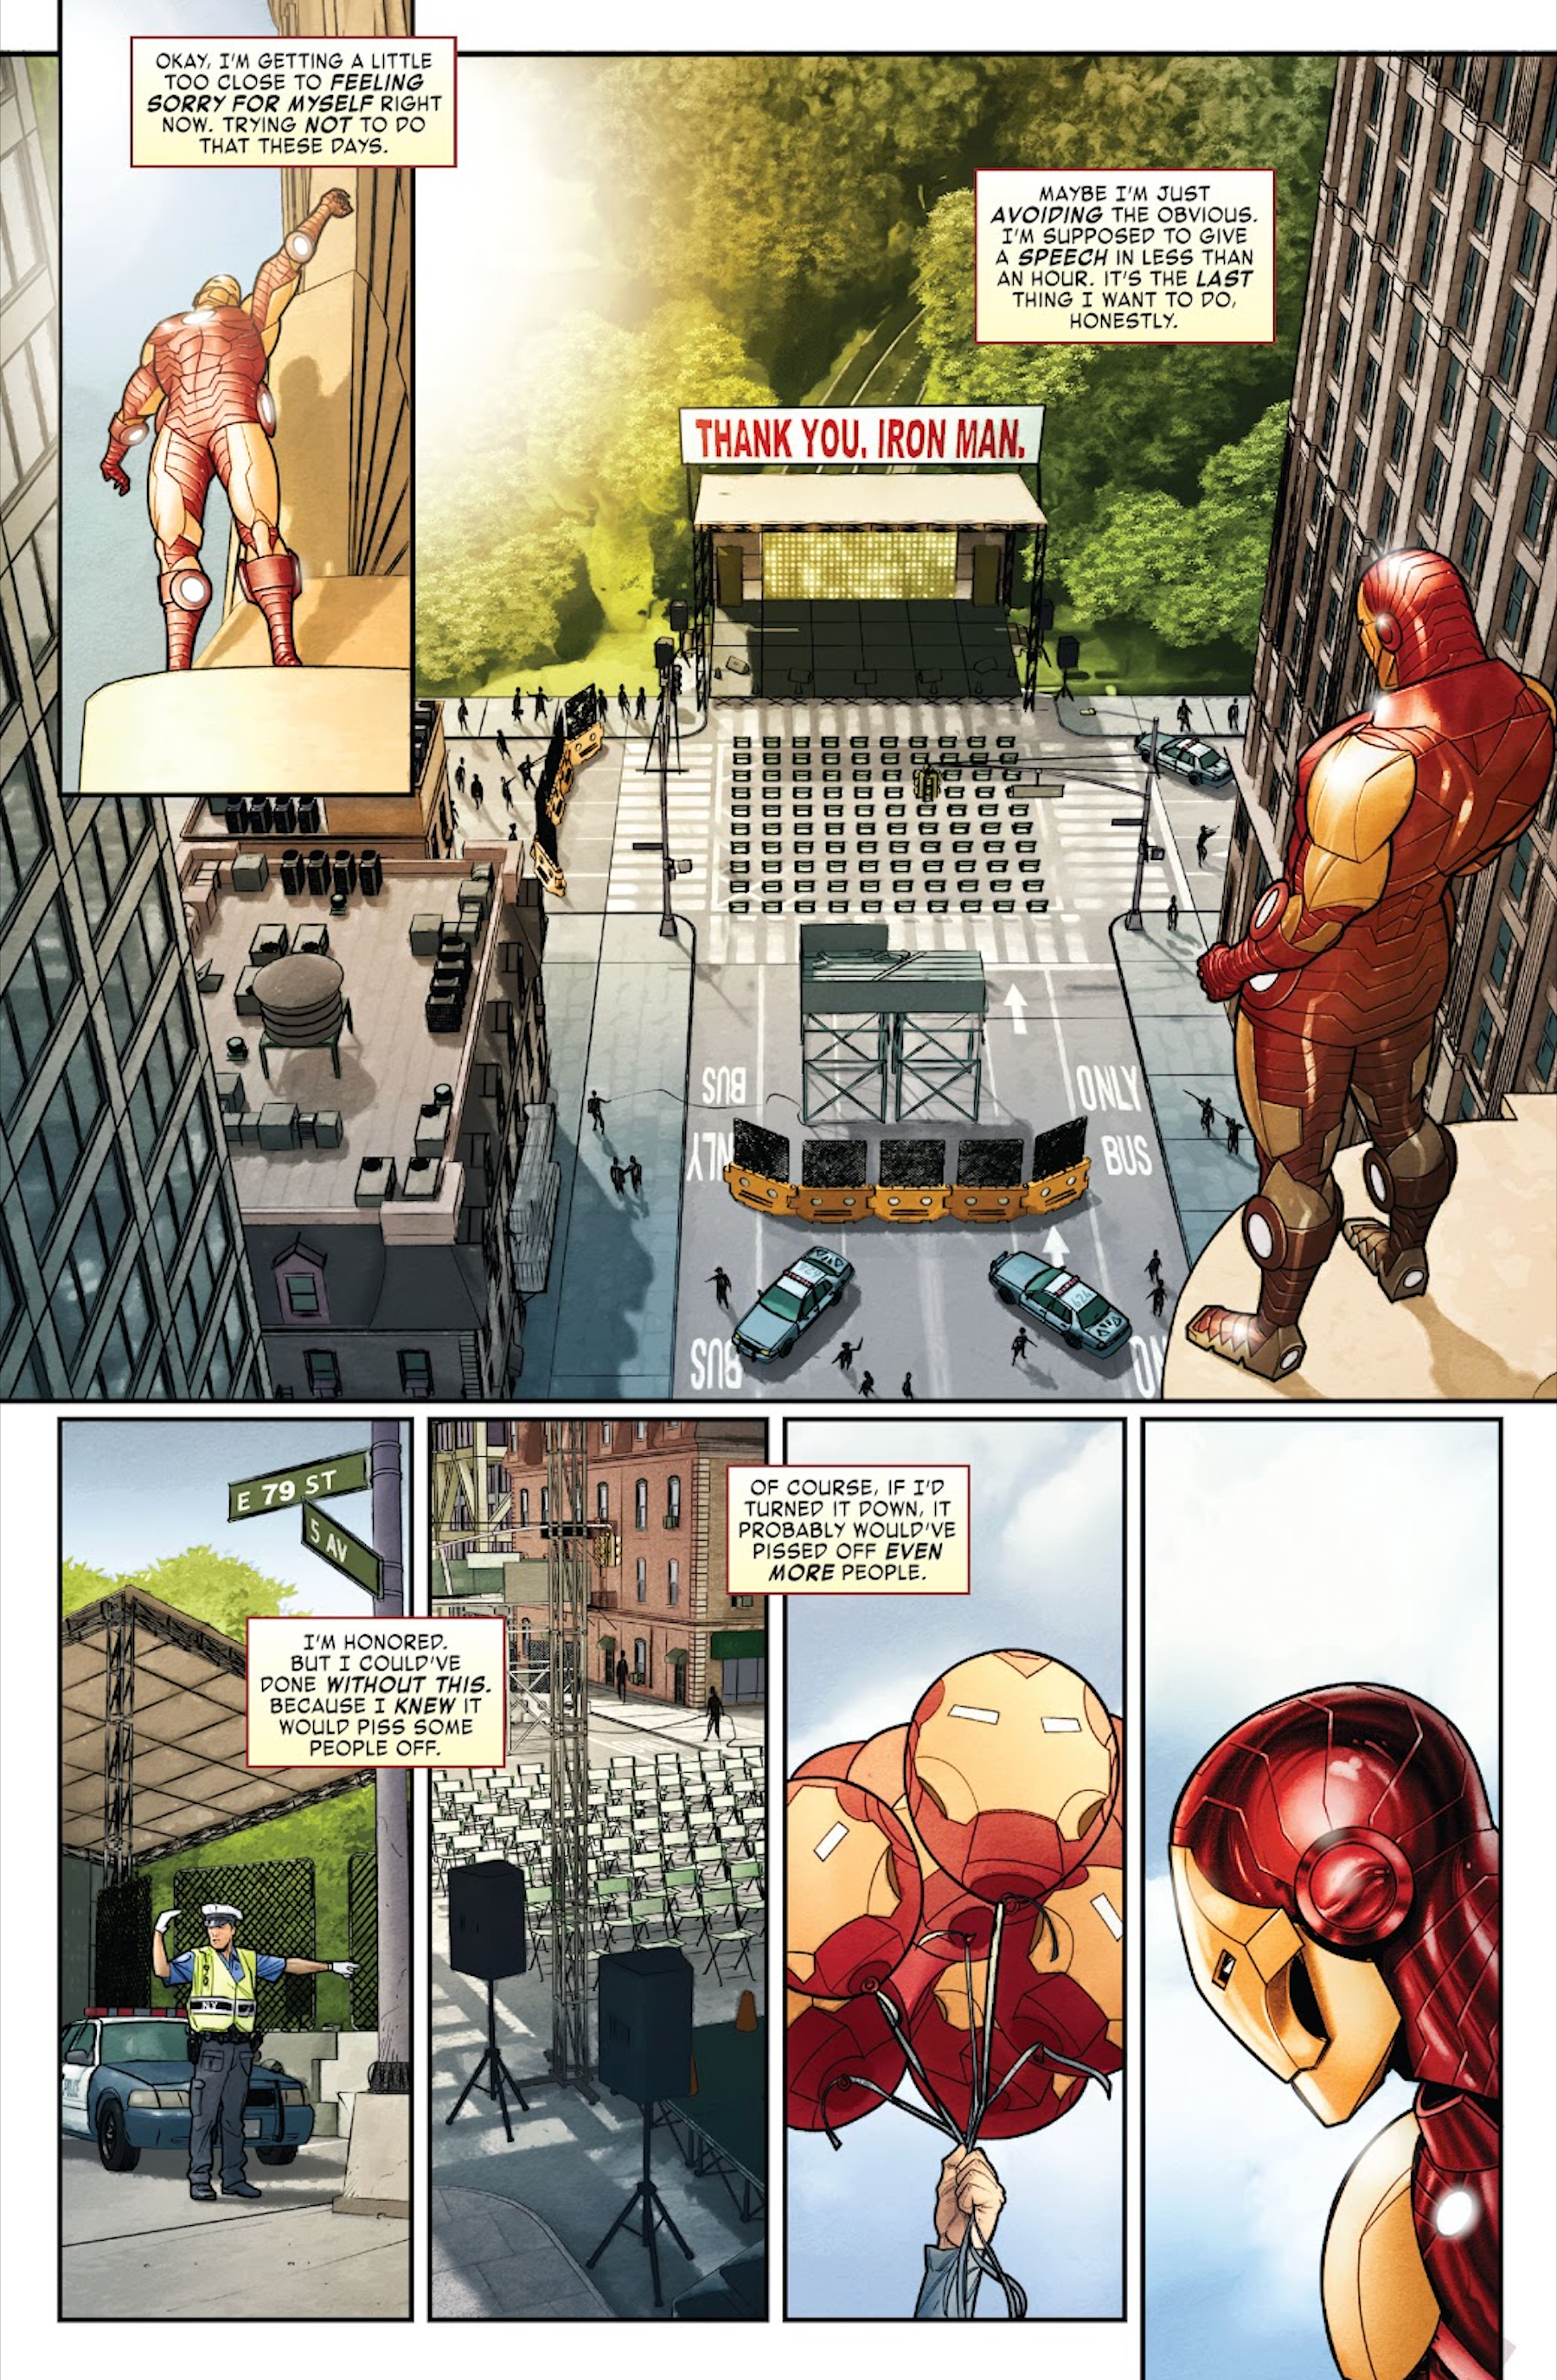 Iron Man Day in Marvel Comics